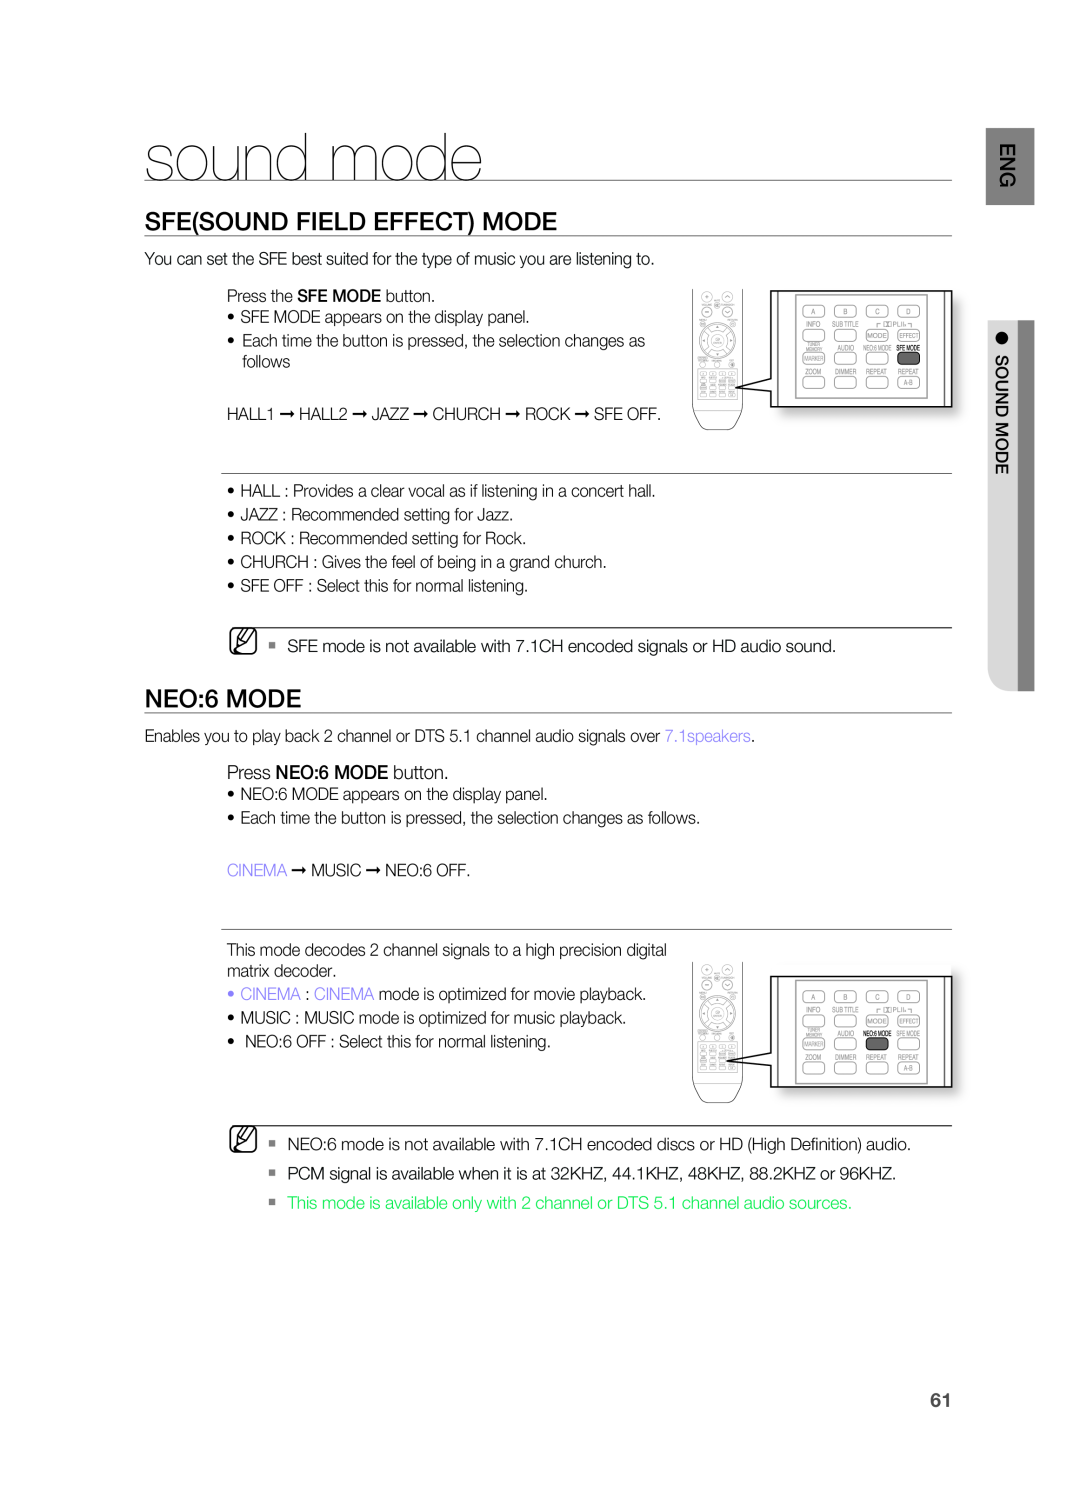 Samsung AH68-02019S manual sound mode, SFESOUnD FIELD EFFECT MODE, nEO:6 MODE 